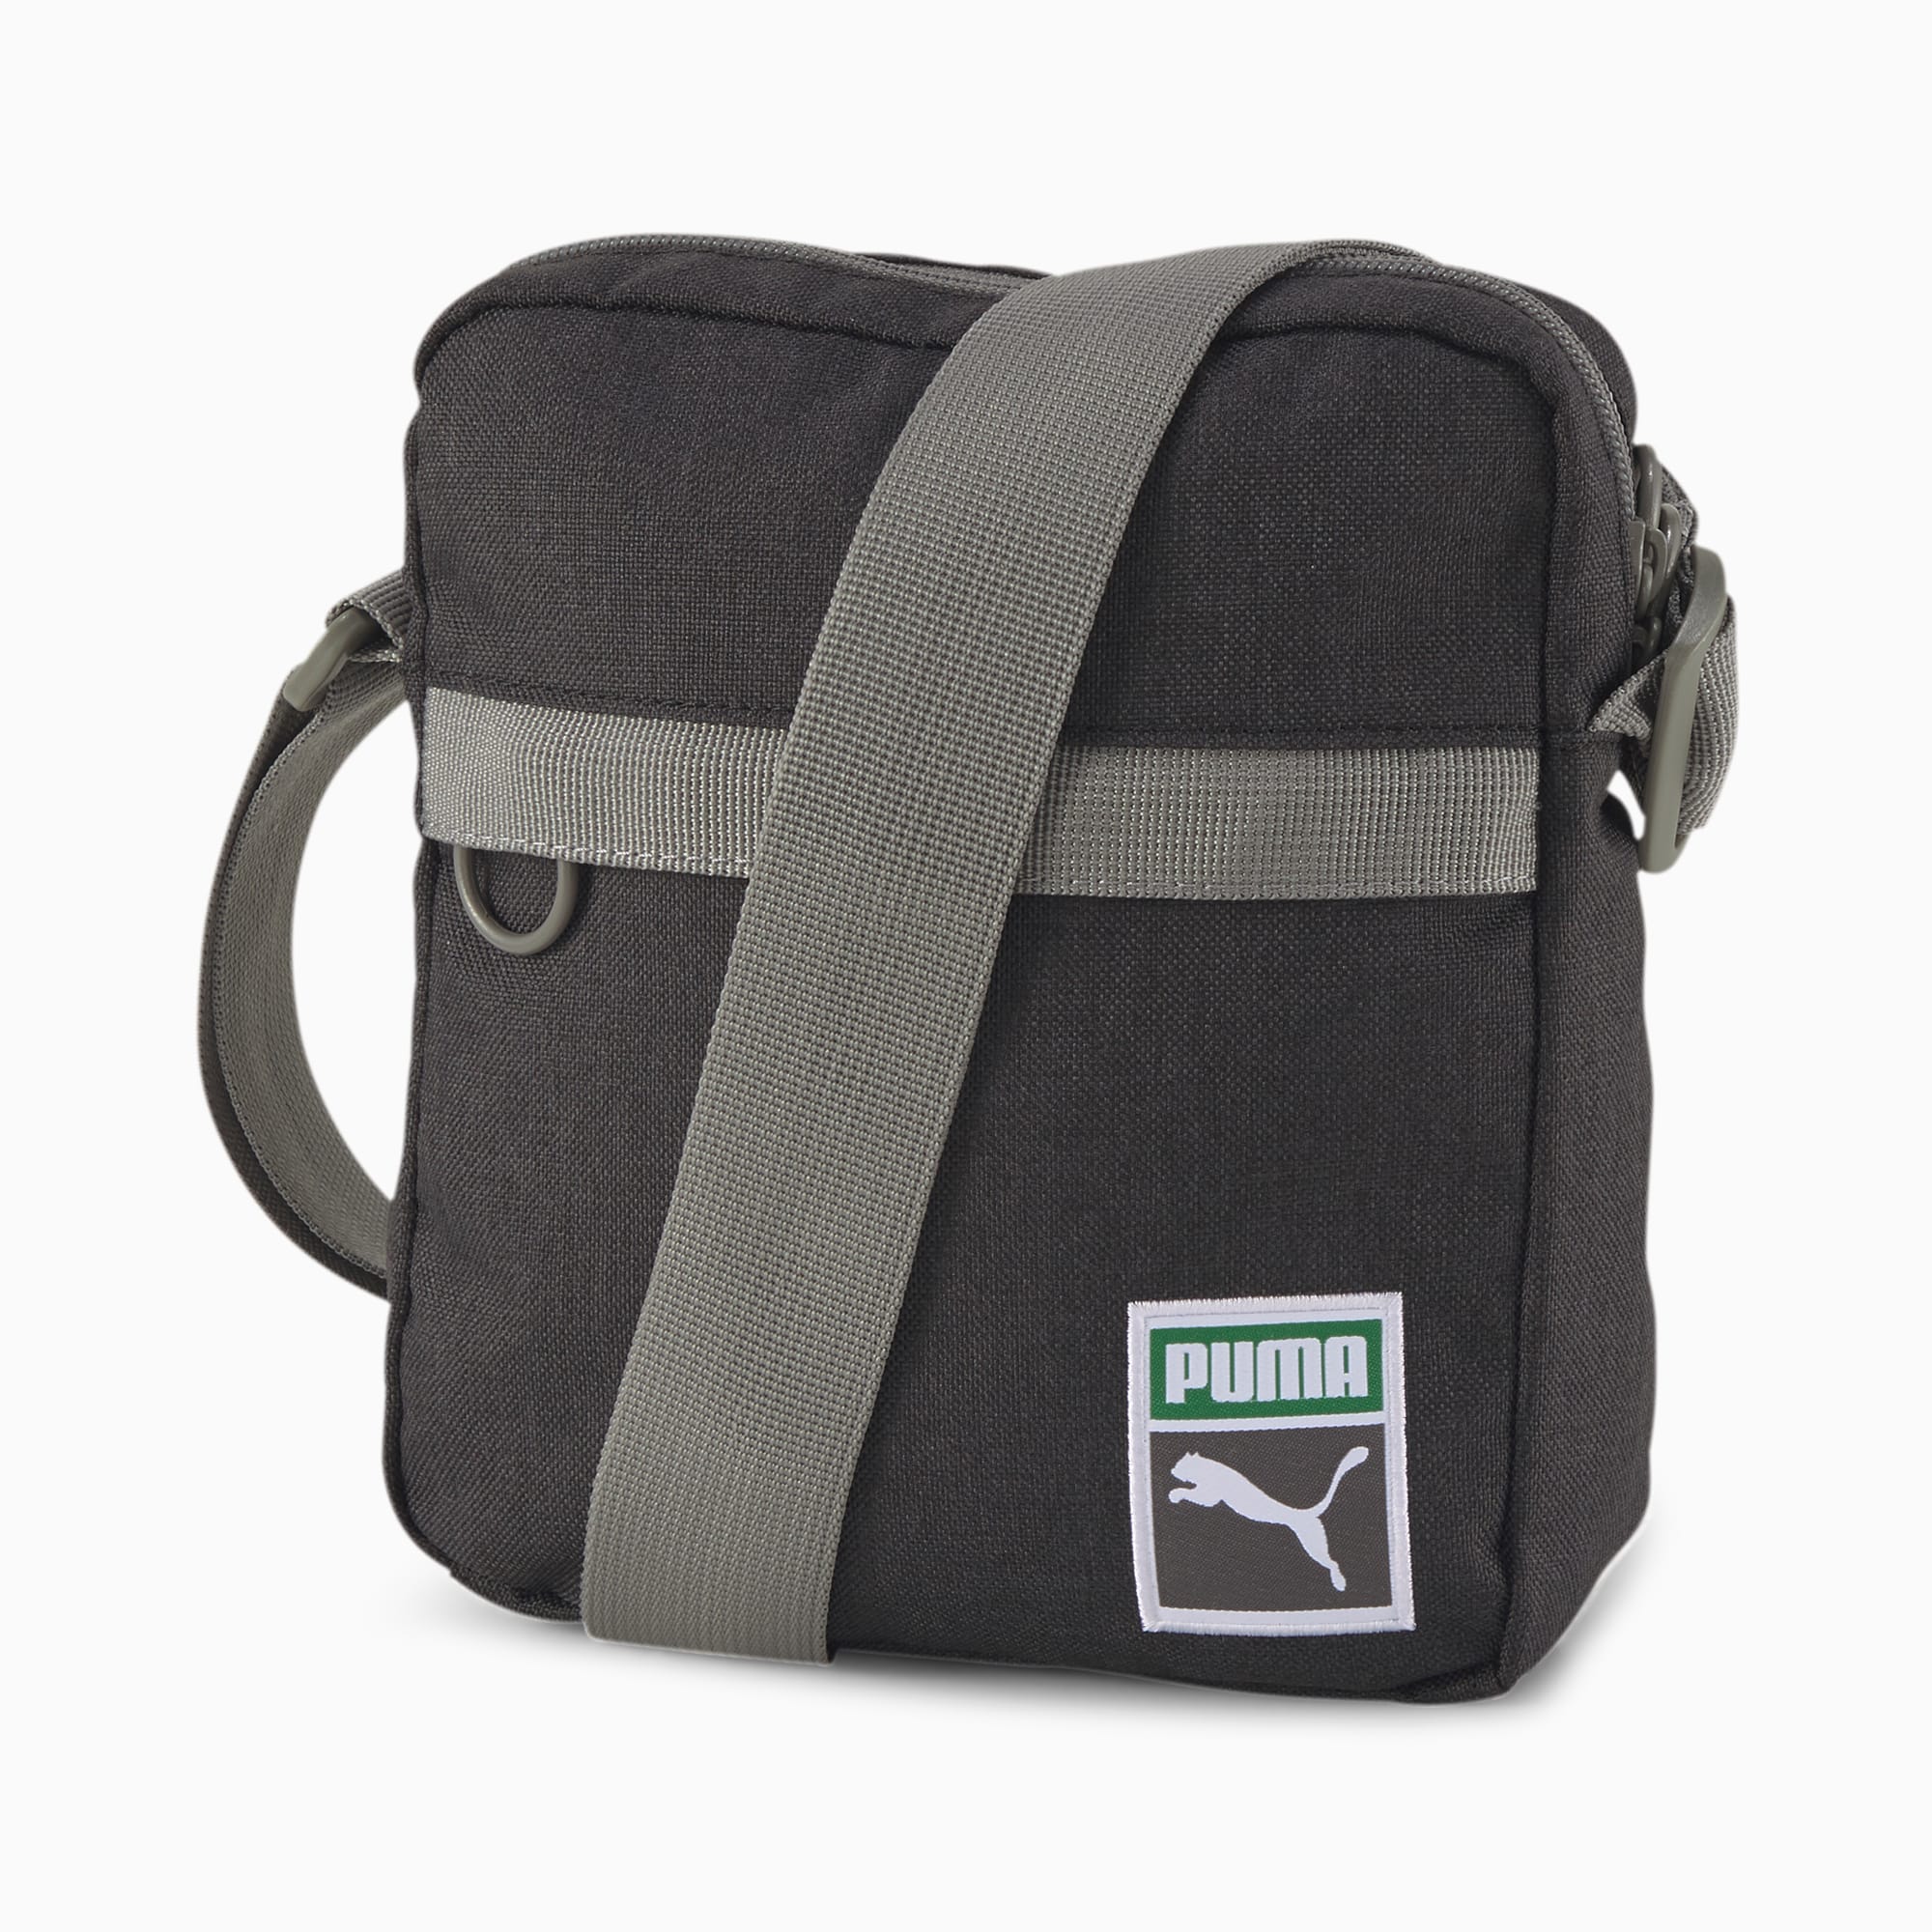 Originals Retro Portable Shoulder Bag 